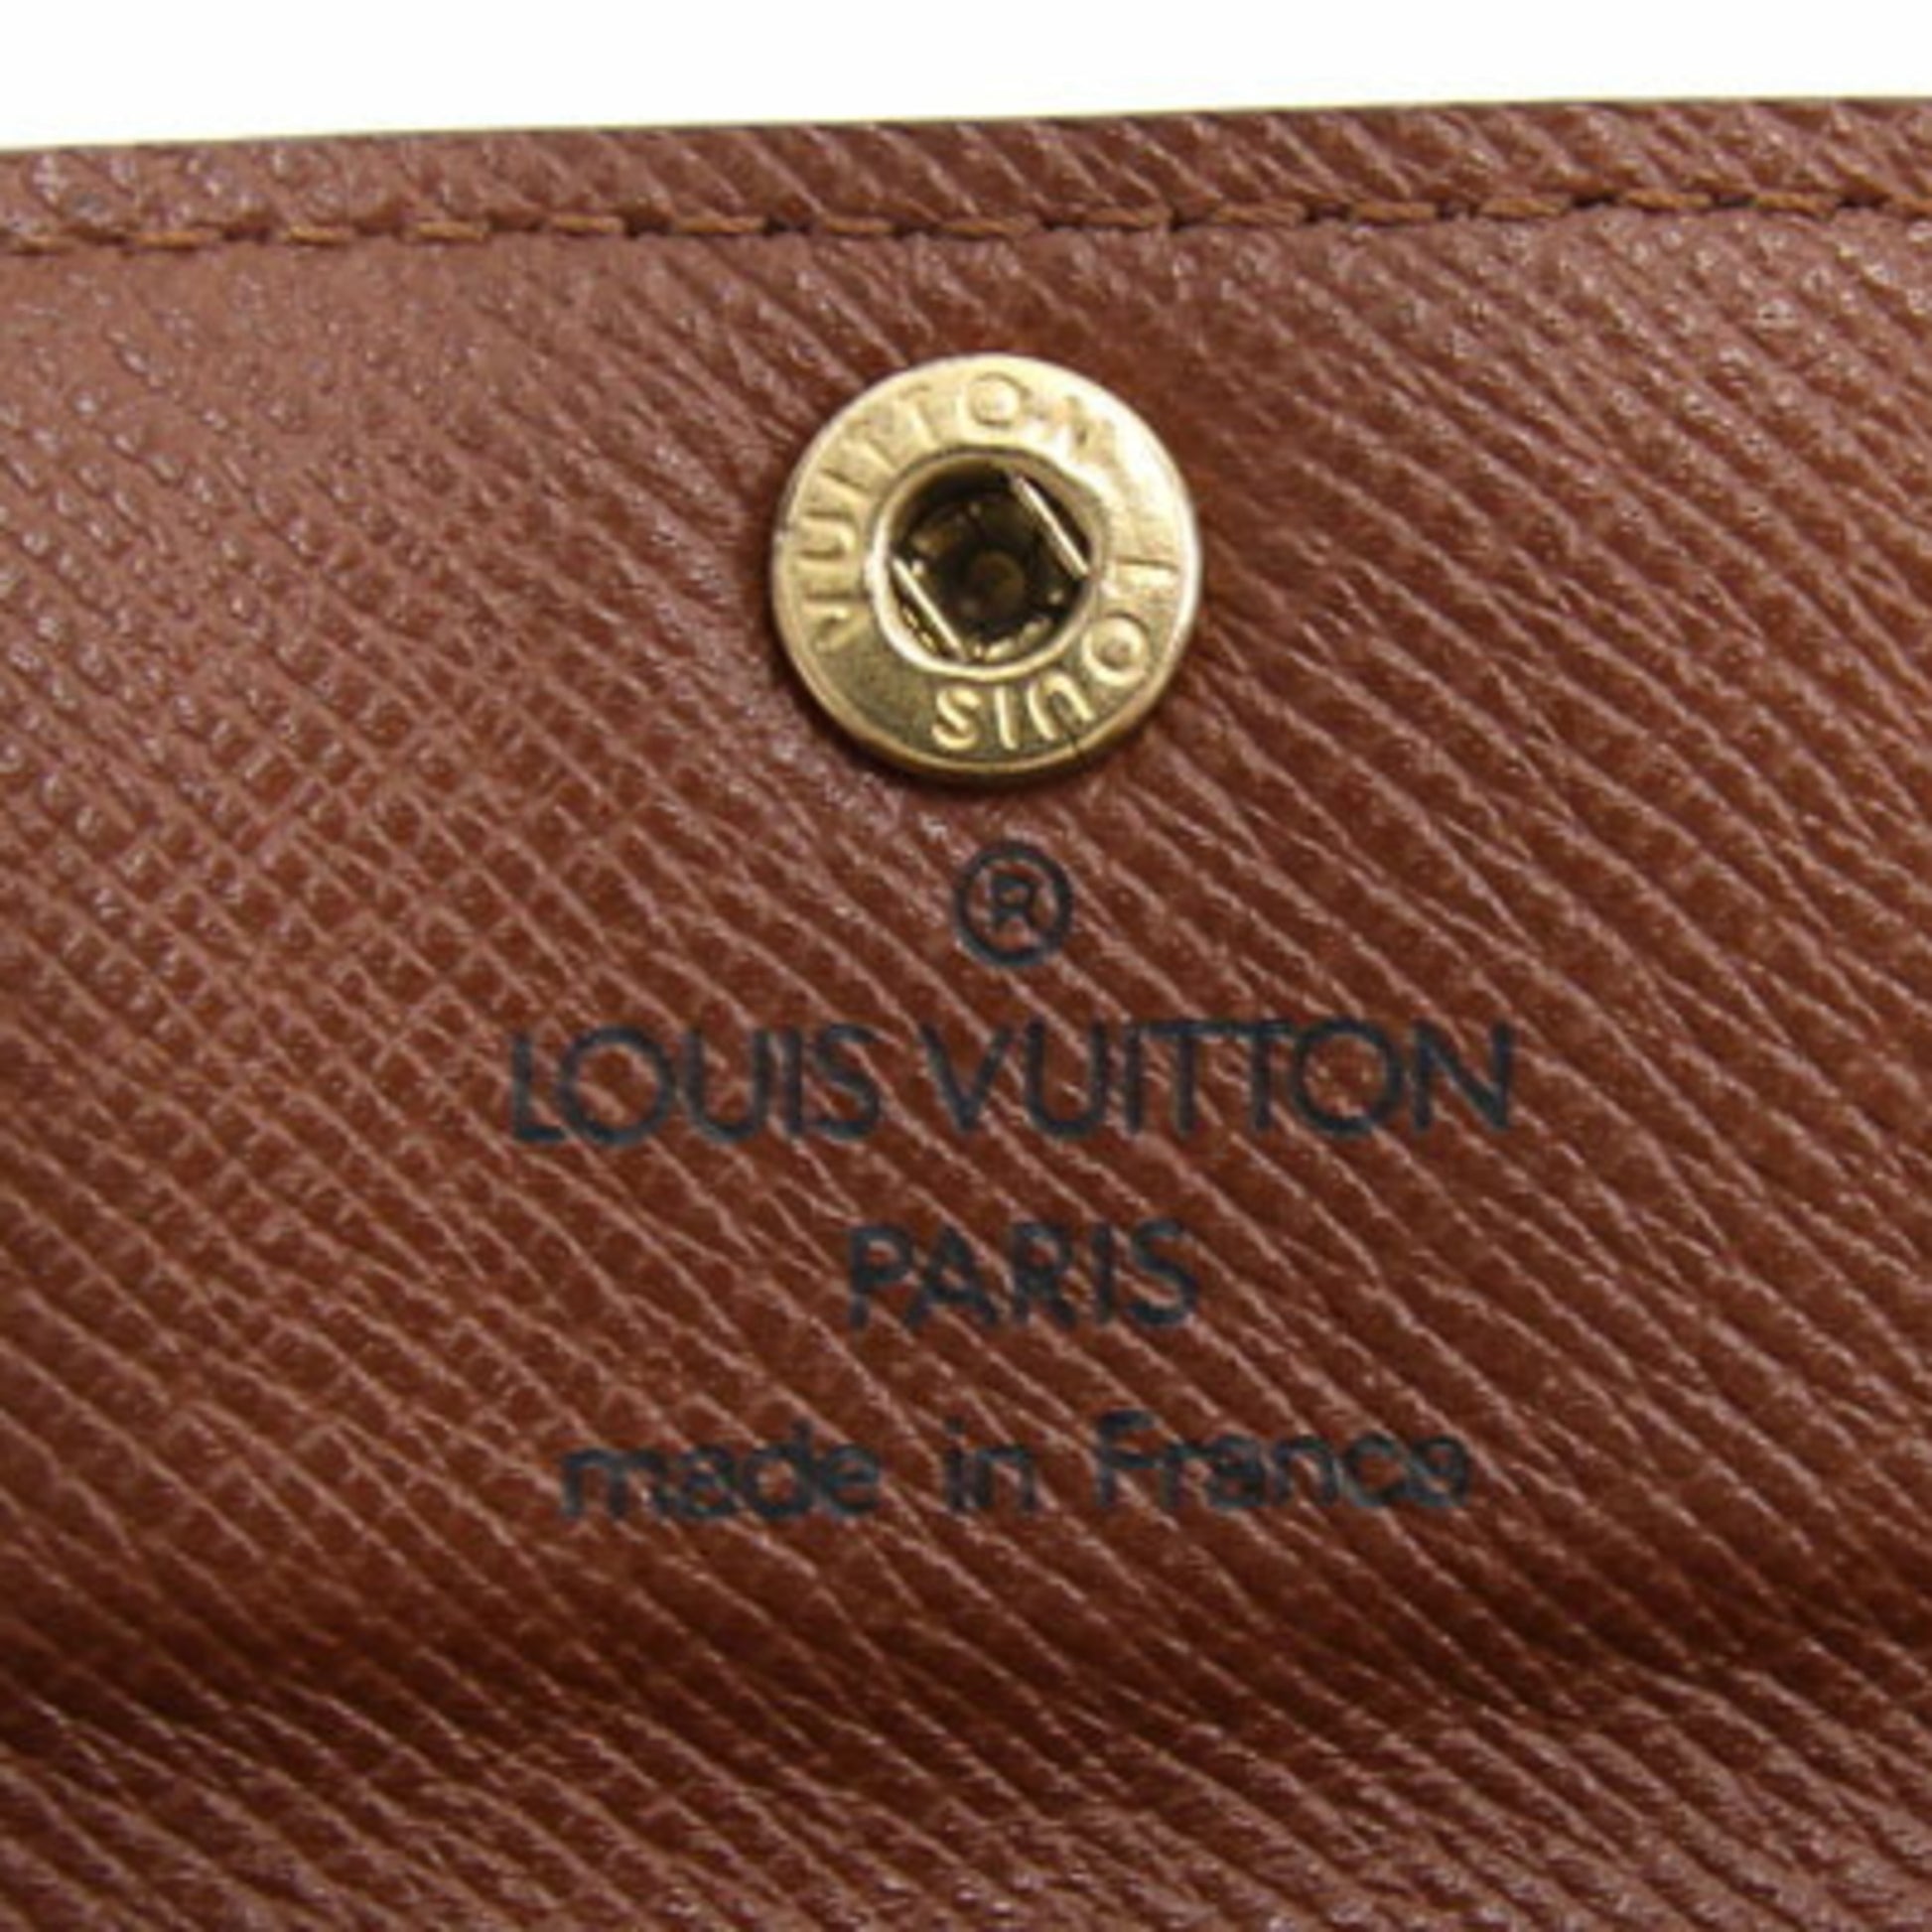 Louis Vuitton Coin Case Wallet Monogram Ludlow M61927 Brown Free Shipping